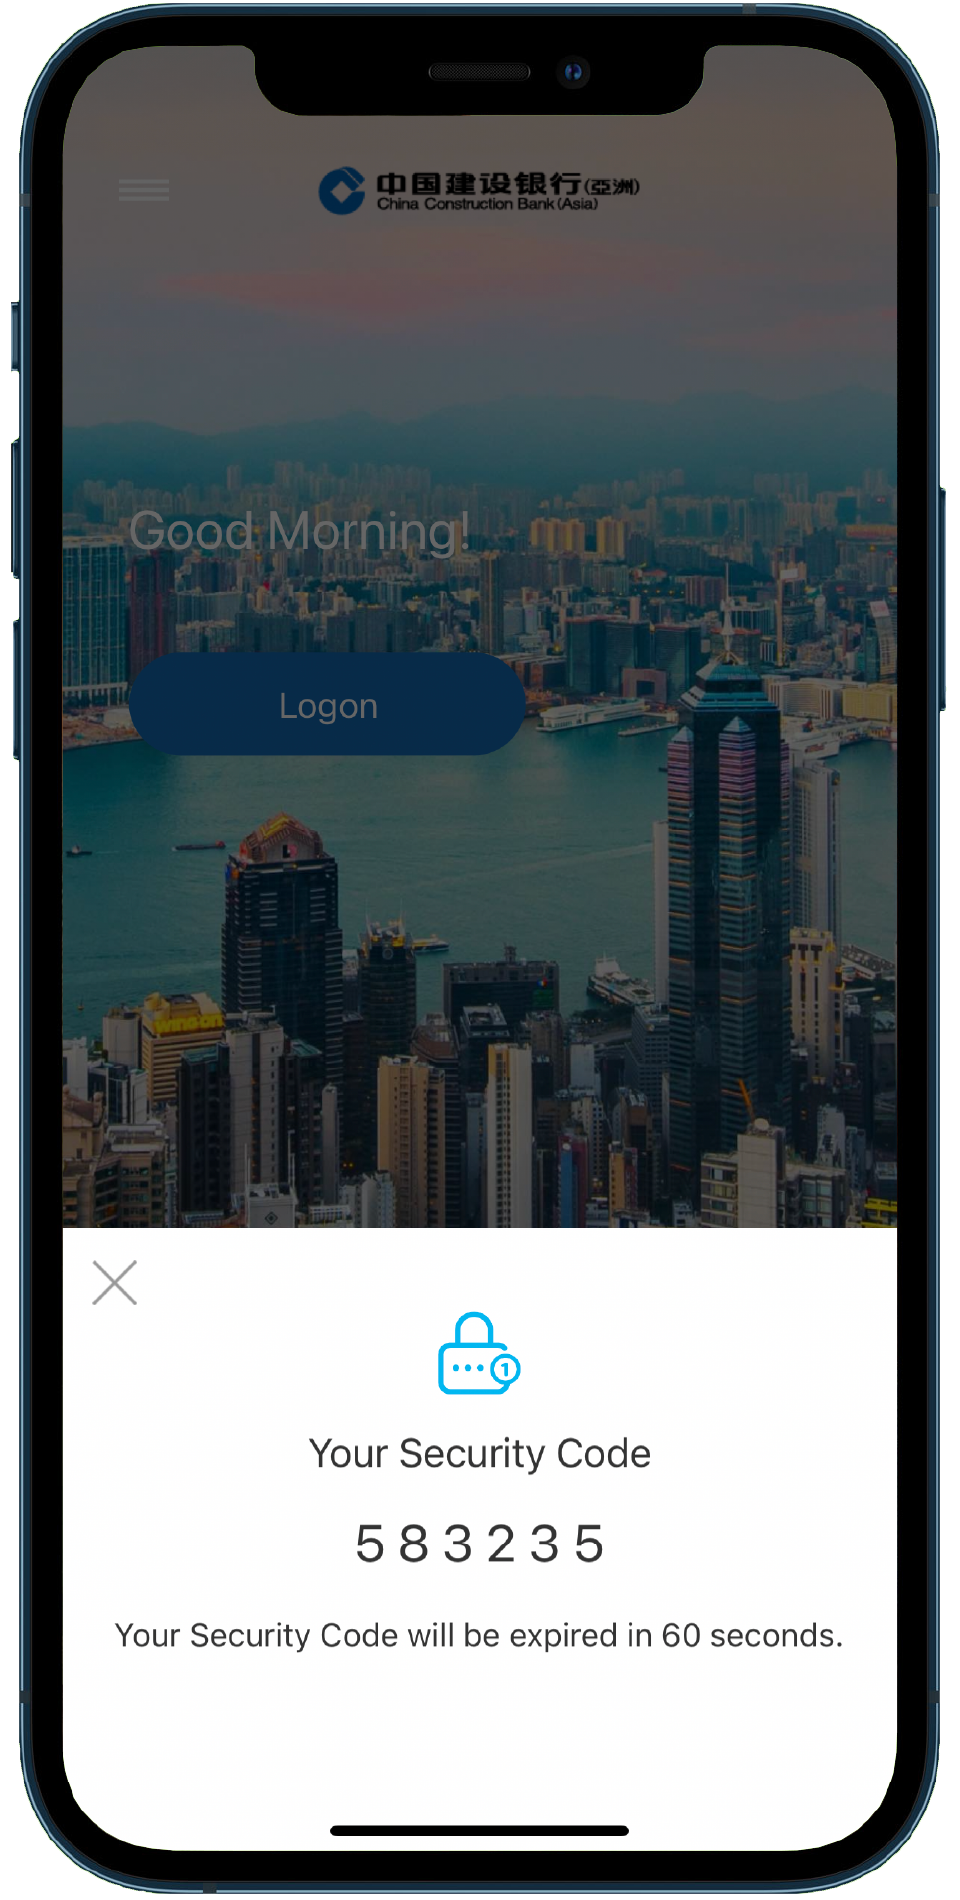 Mobile Token works on Mobile Banking